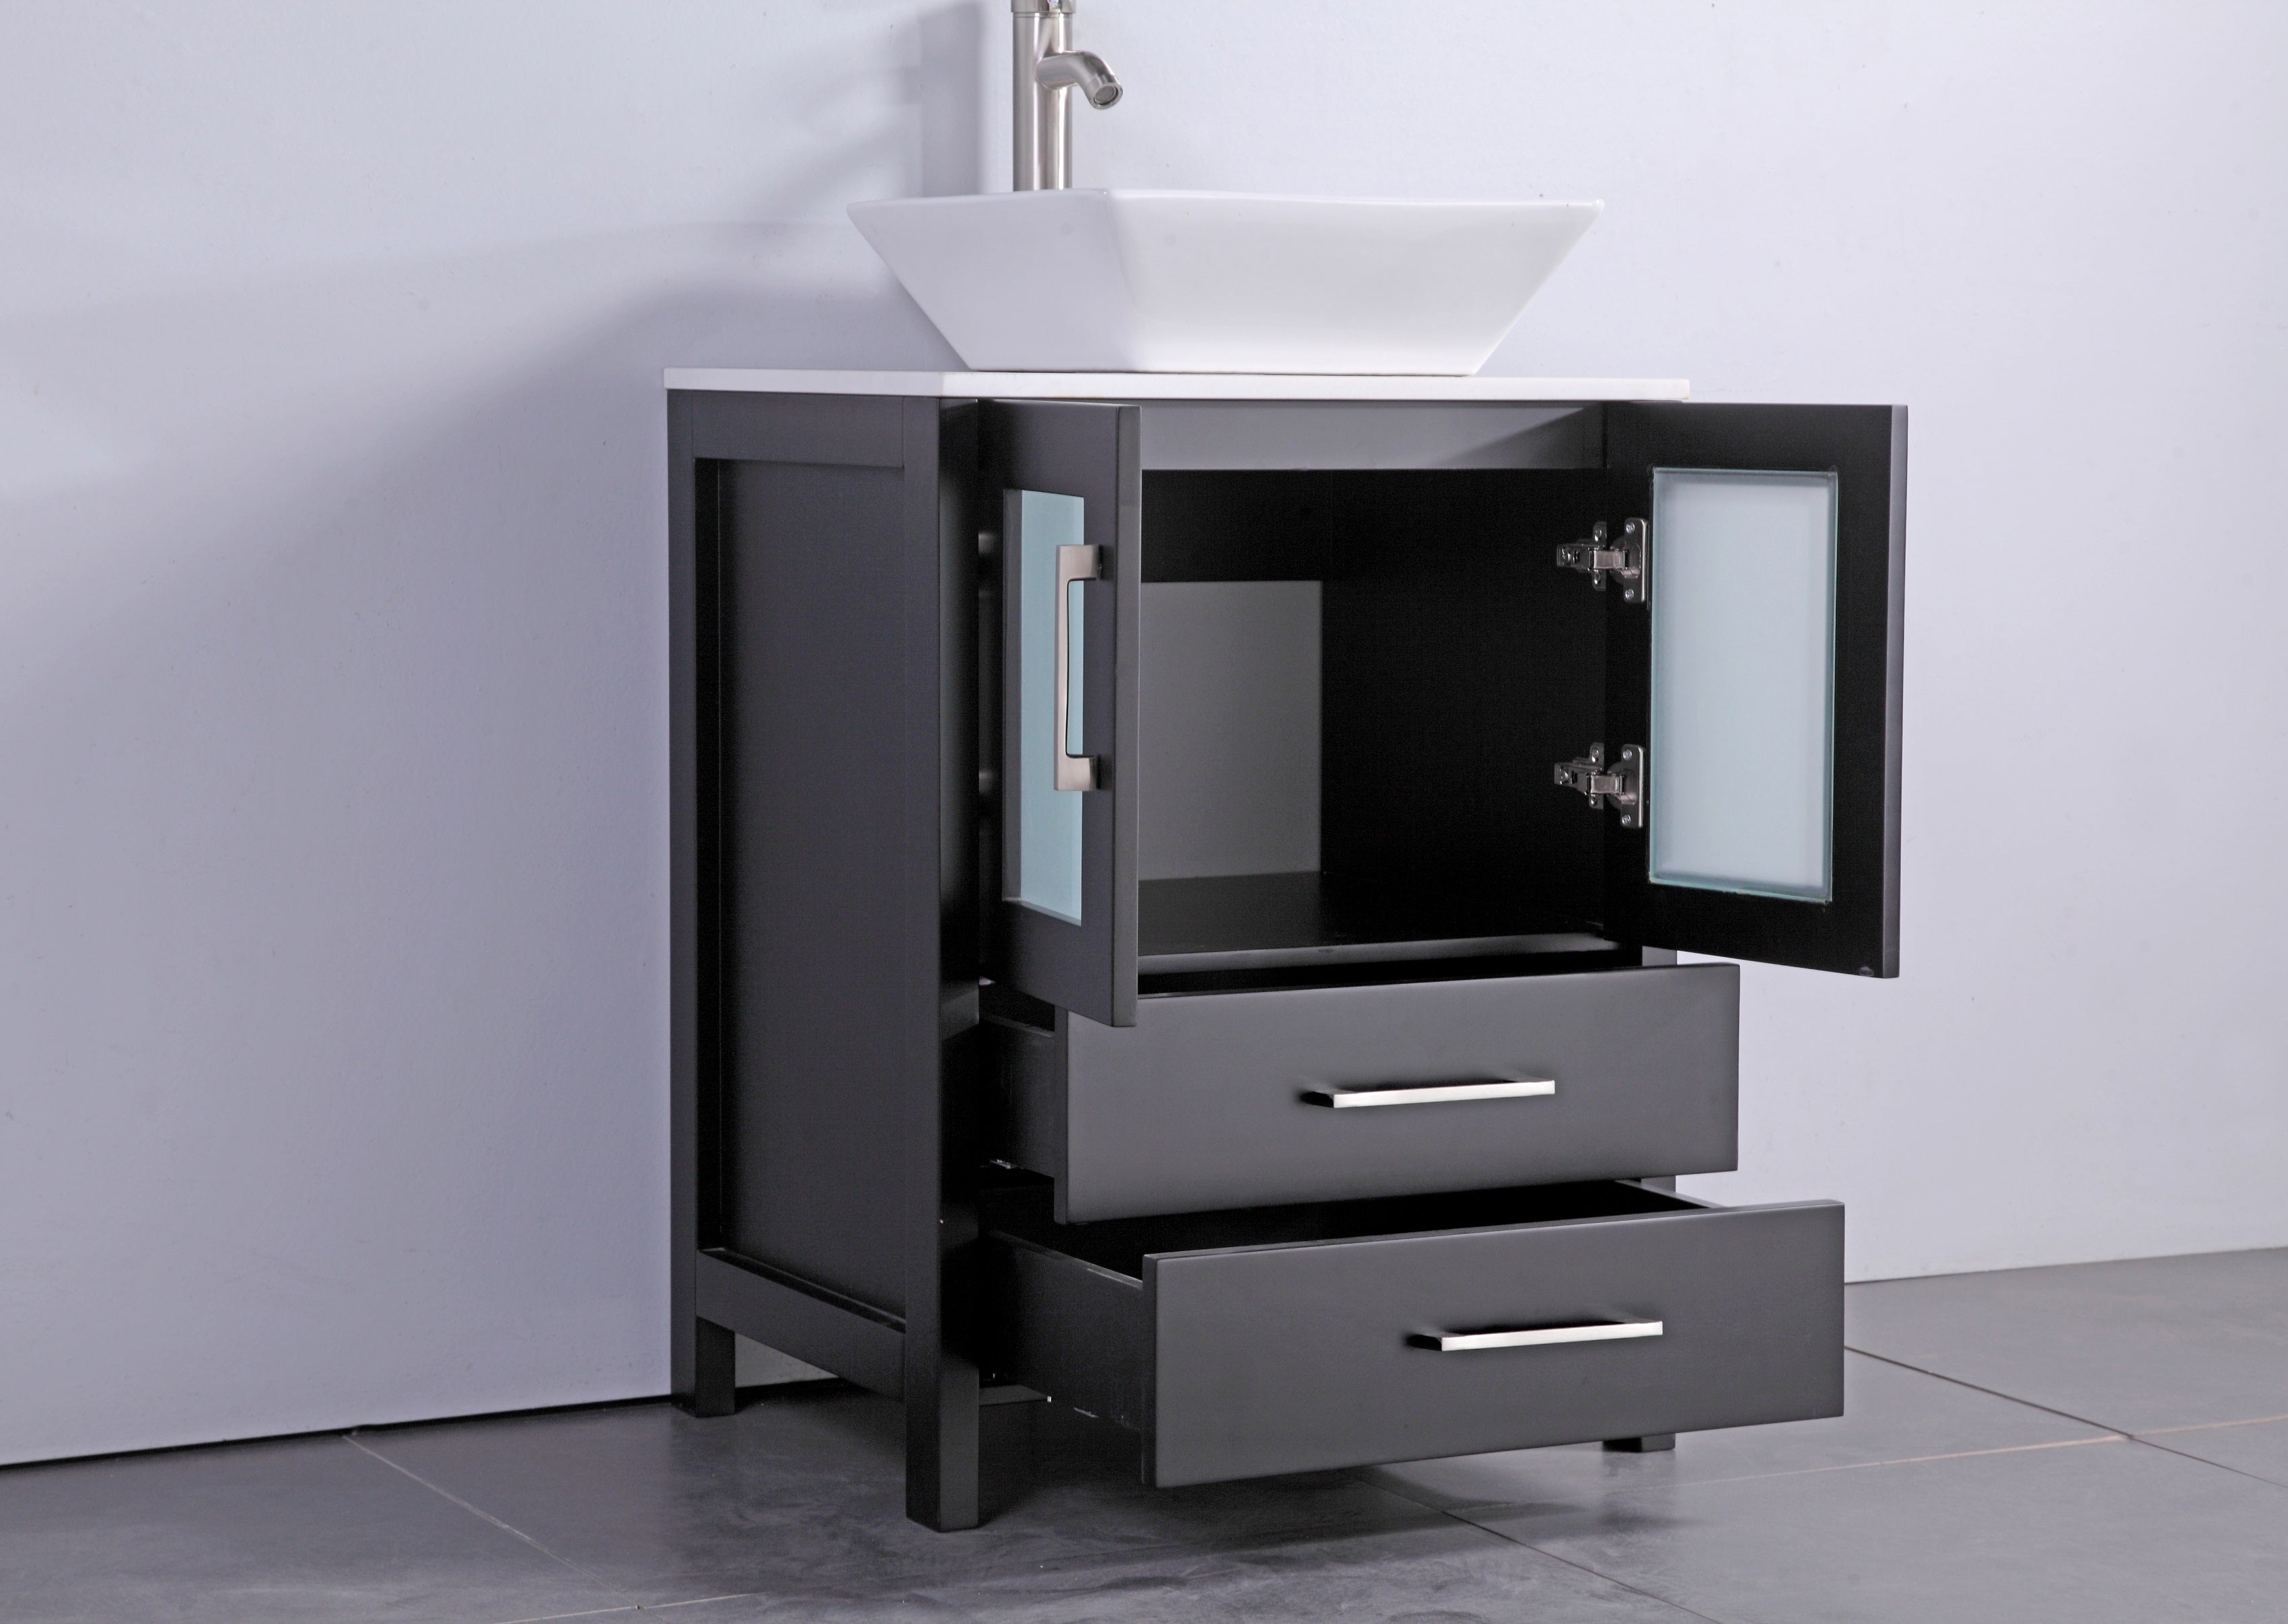 Vanity Art - Monaco 48" Single Vessel Sink Bathroom Vanity Set with Sink and Mirror - 2 Side Cabinets - Bhdepot 